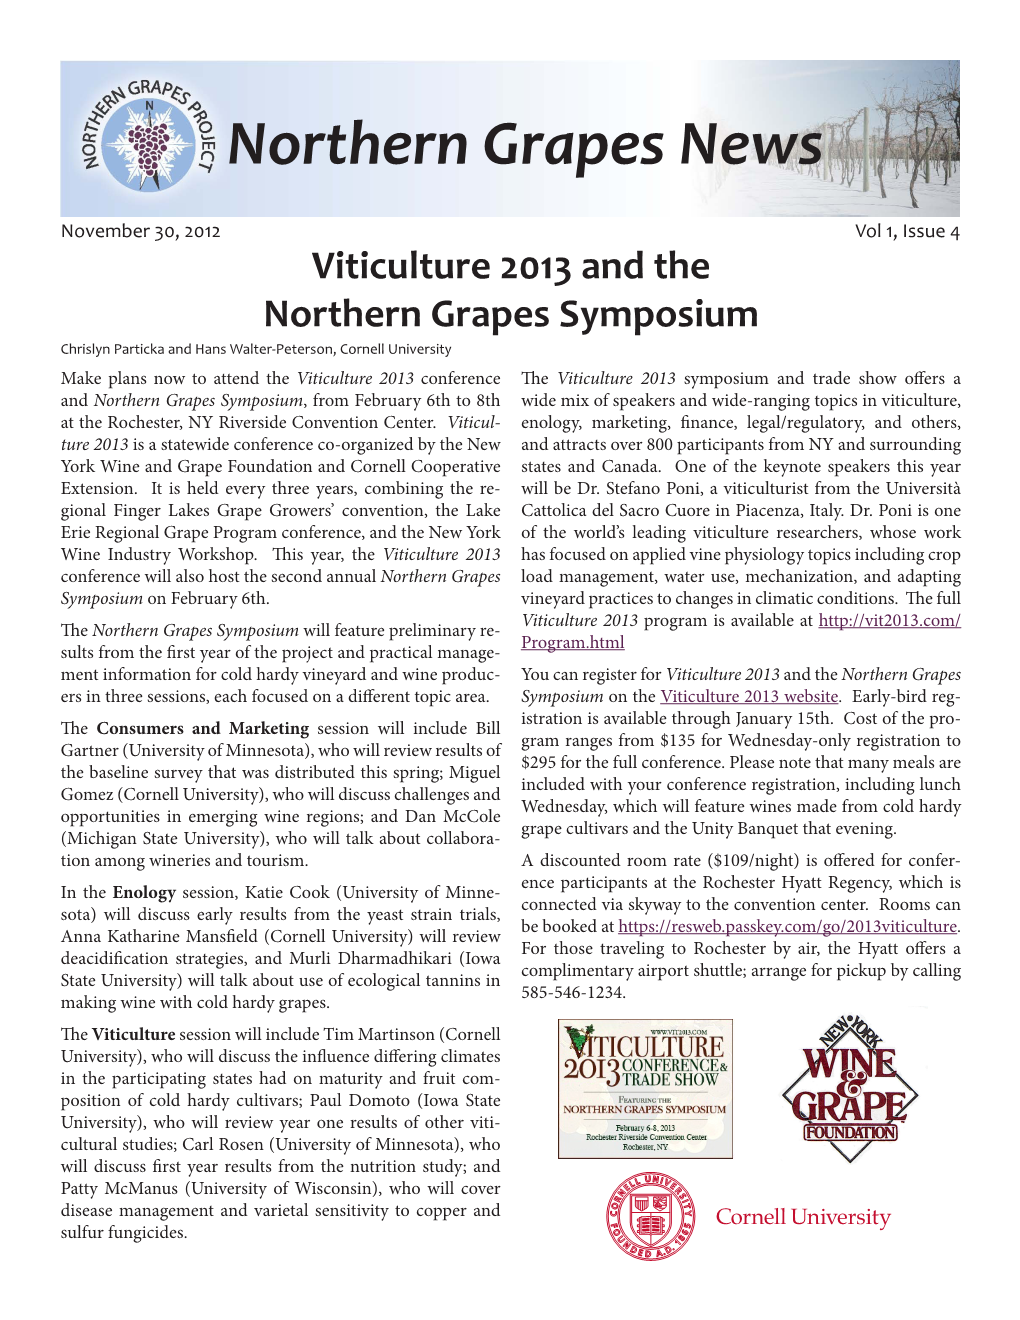 Northern Grapes News Vol 1, Issue 4 November 30, 2012